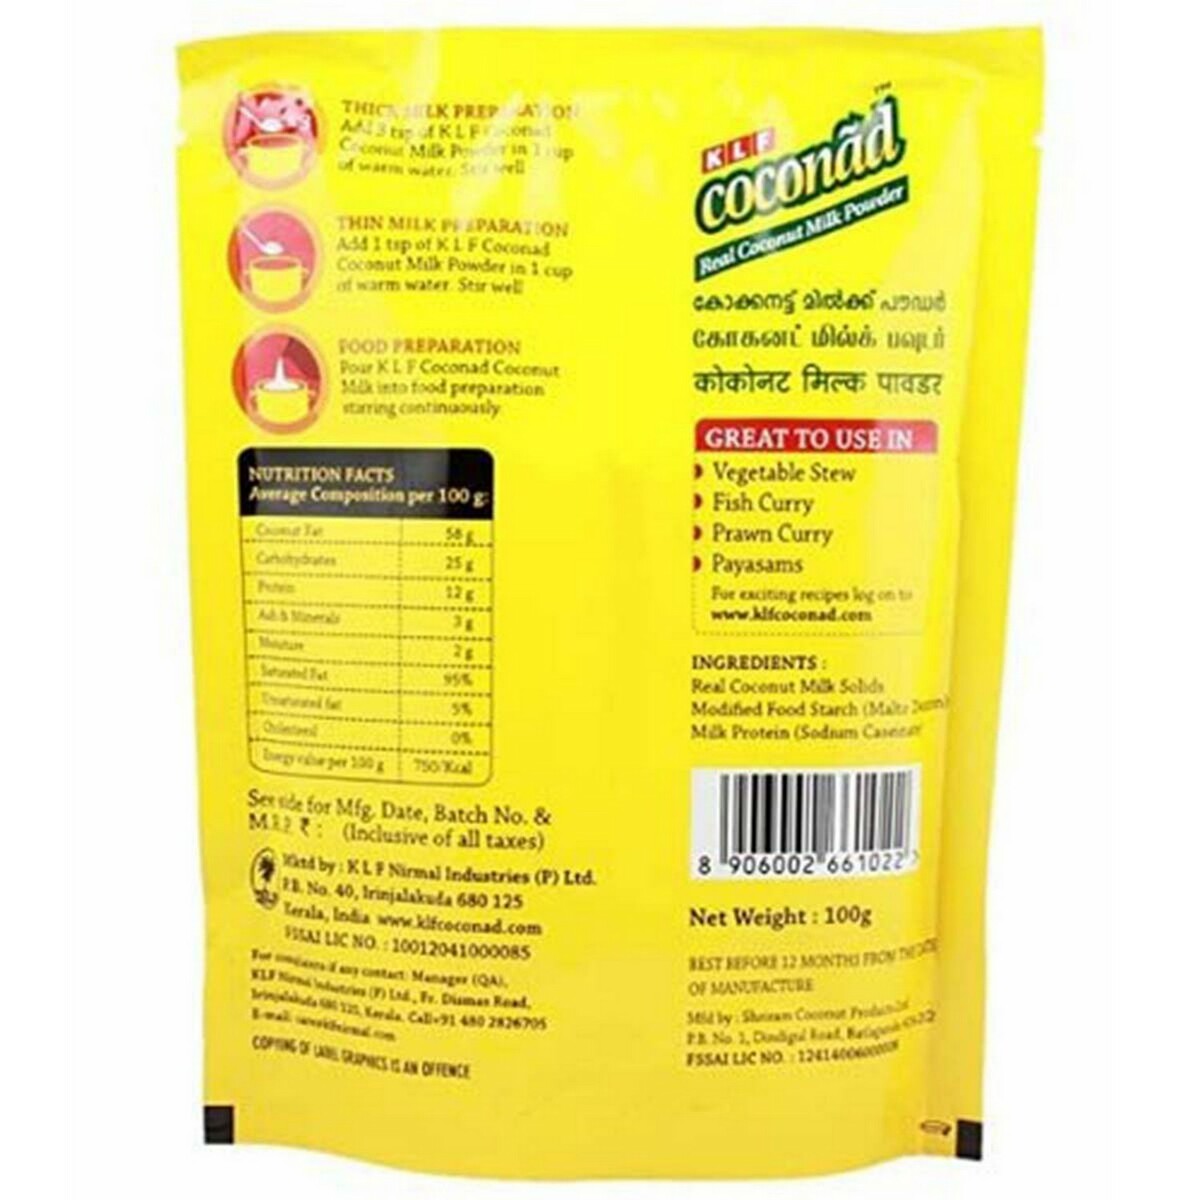 KLF Coconad Coconut Milk Powder 100g